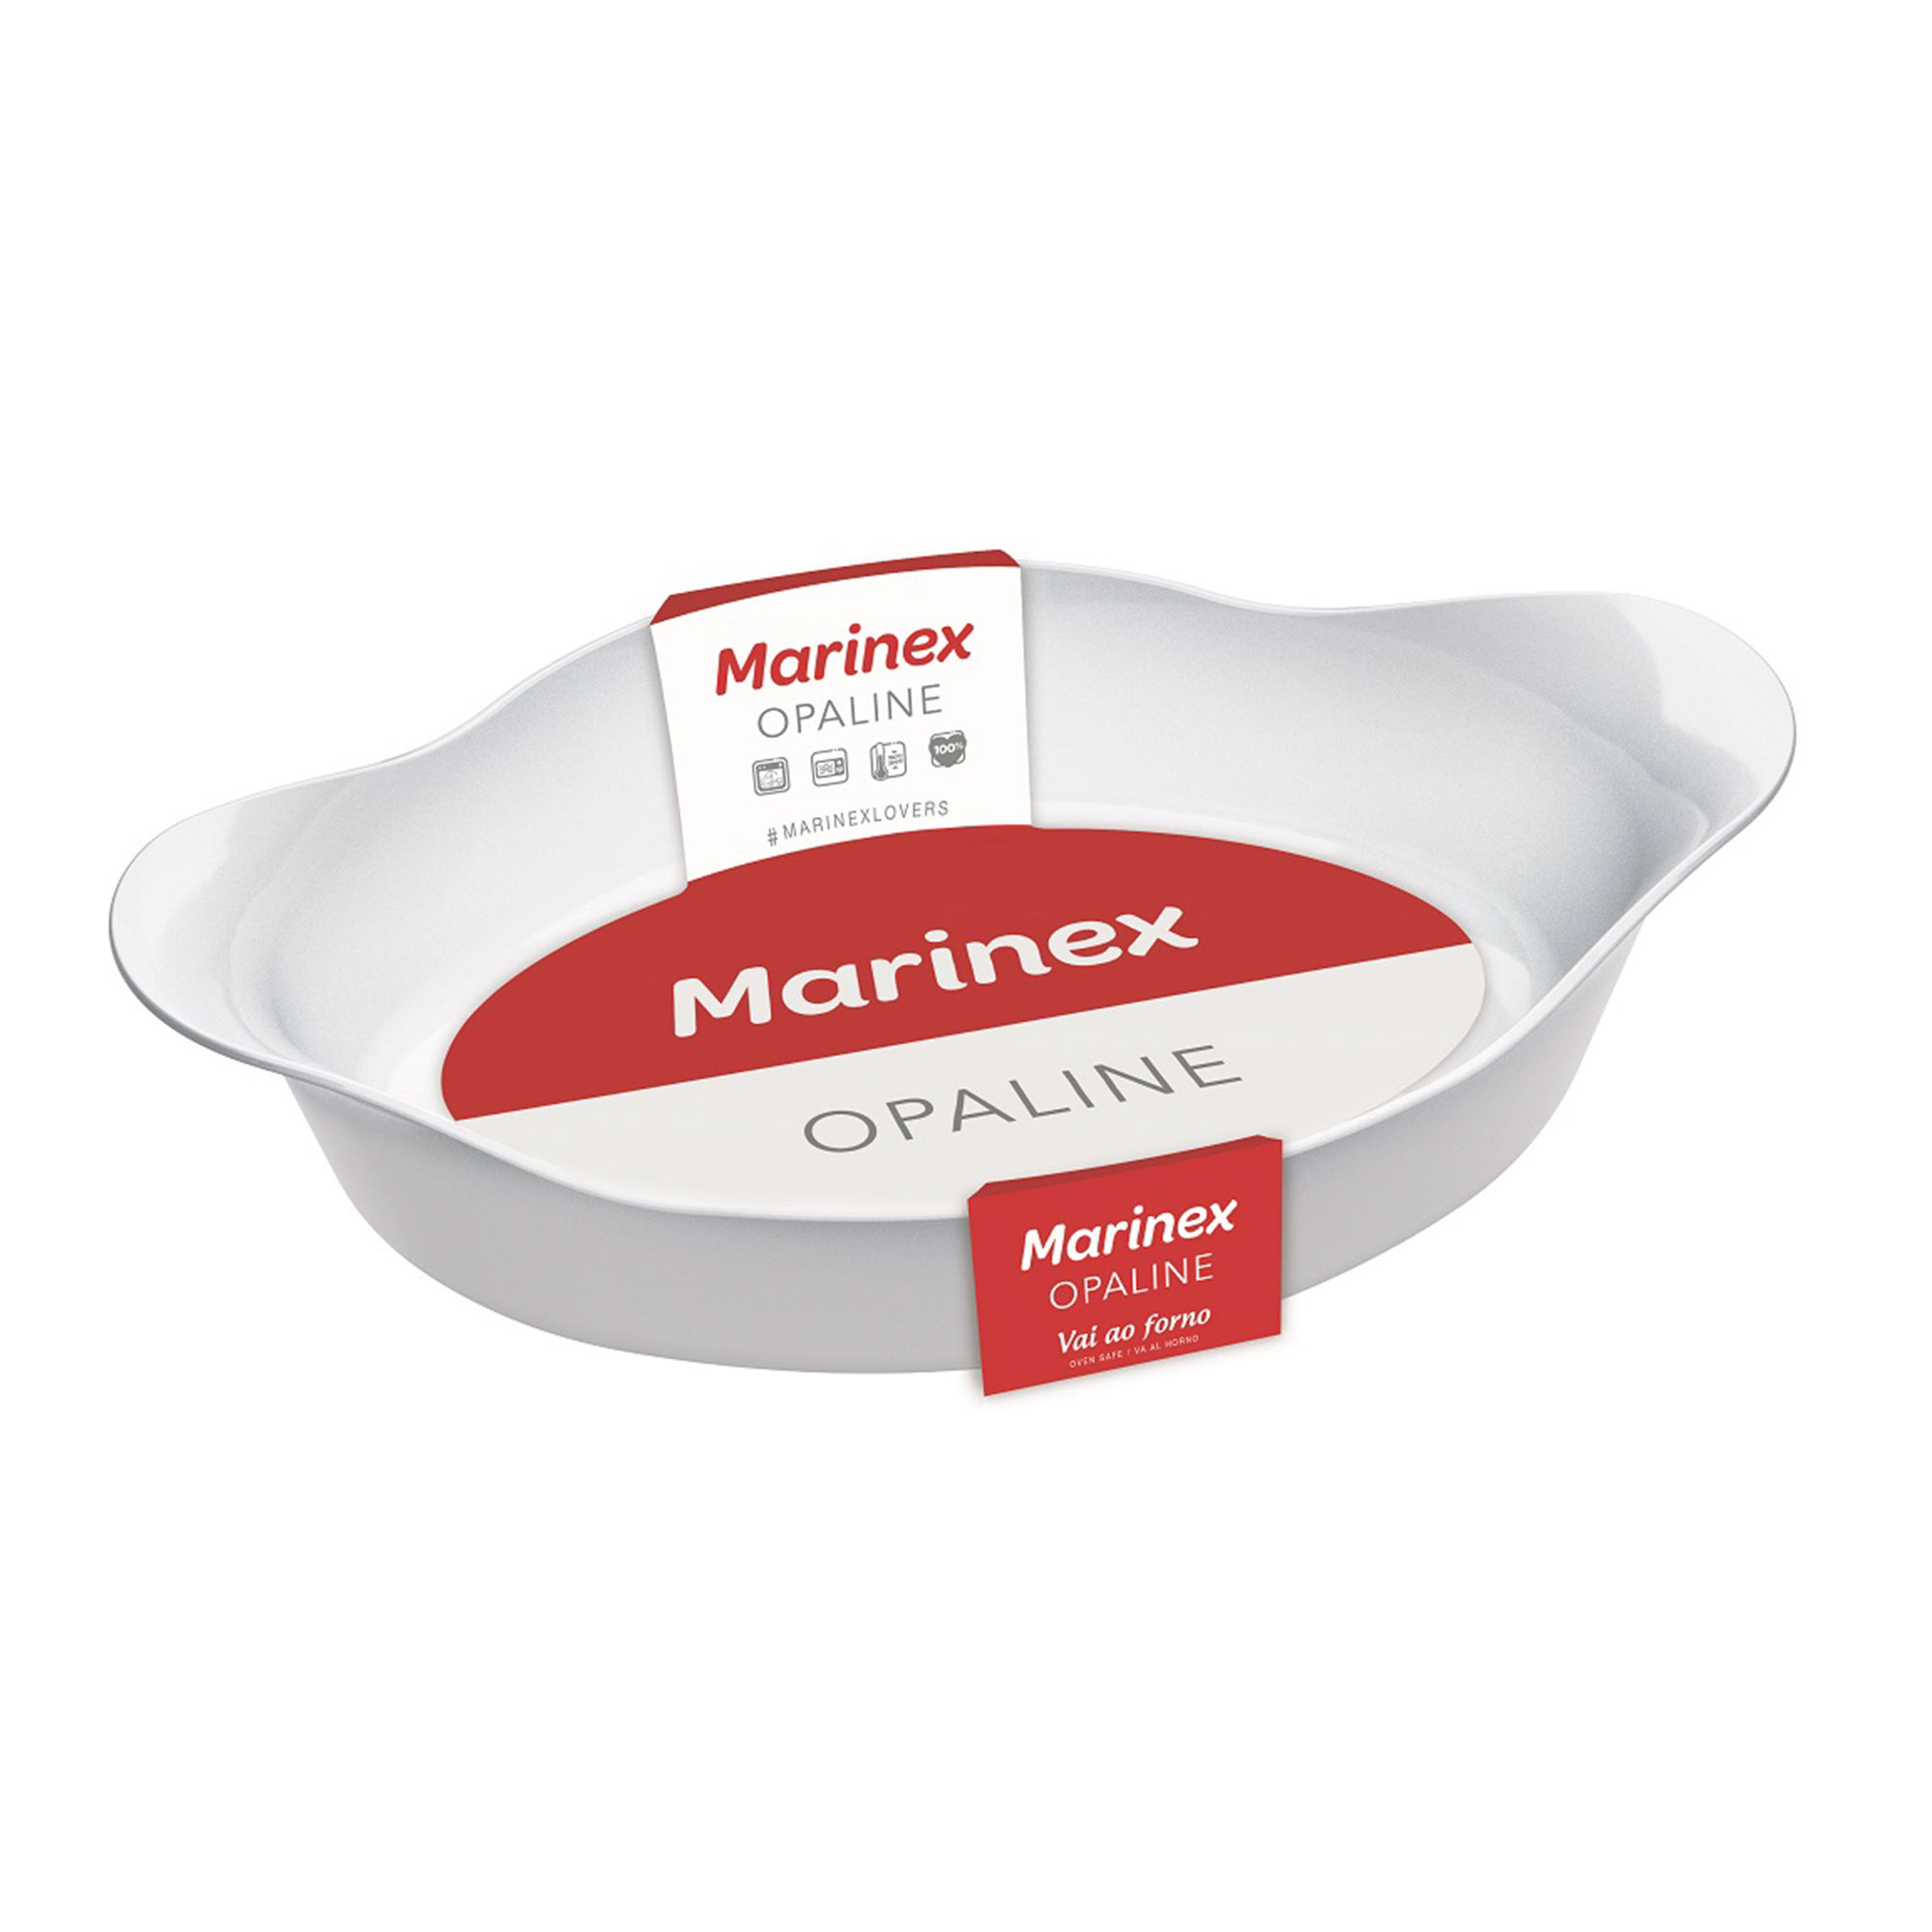 Жаропрочная форма для запекания. Форма для запекания Маринекс. Marinex опал жаропрочная форма круглая 2 л. Marinex Opaline форма для запекания. Стеклянная форма для запекания жаропрочная овал 4,0 л Marinex.